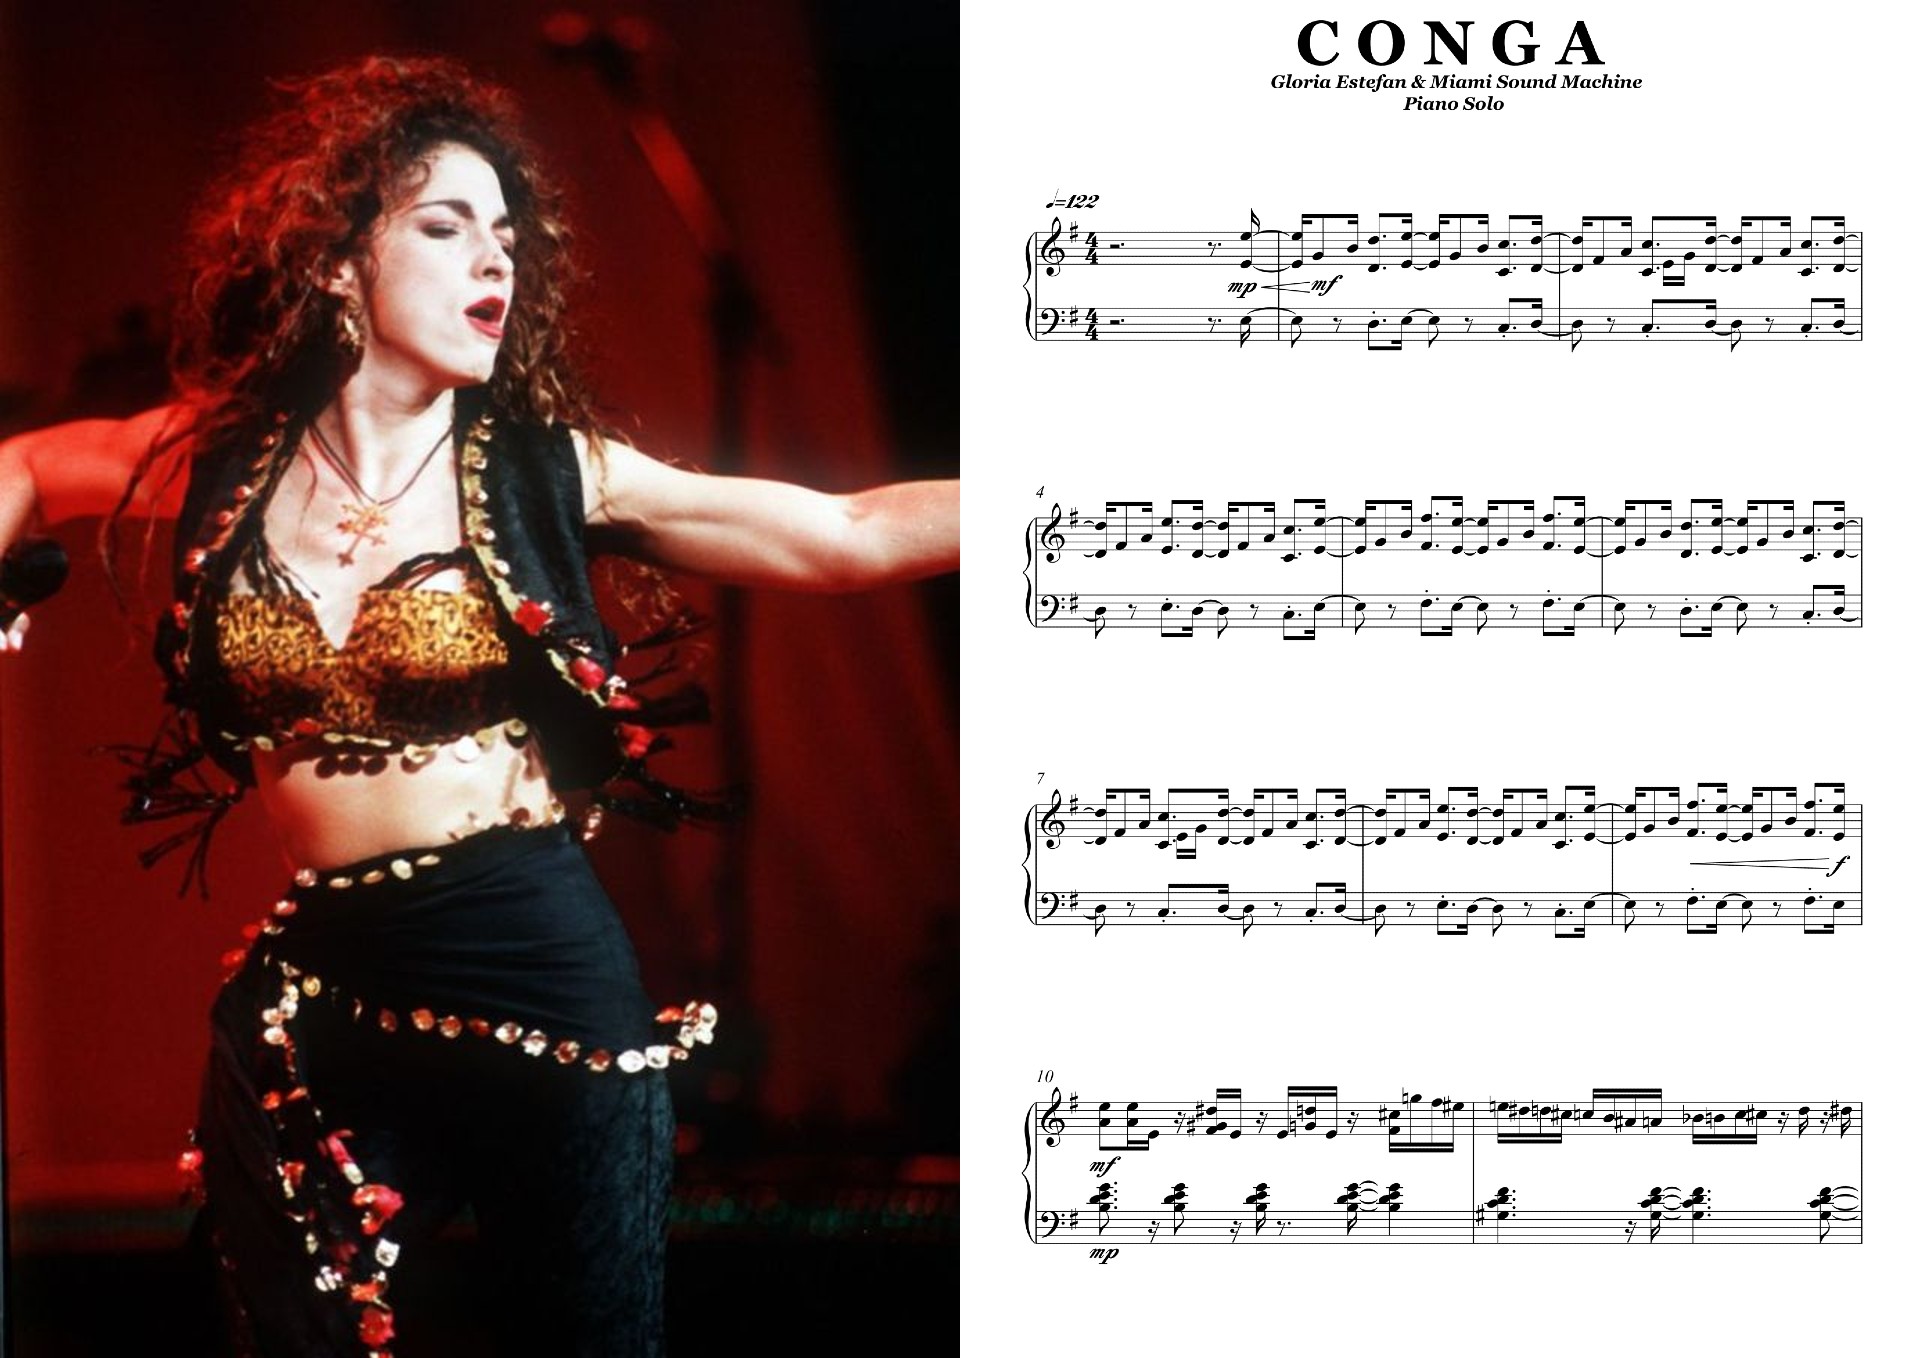 Gloria Estefan - Conga (piano solo only).jpg